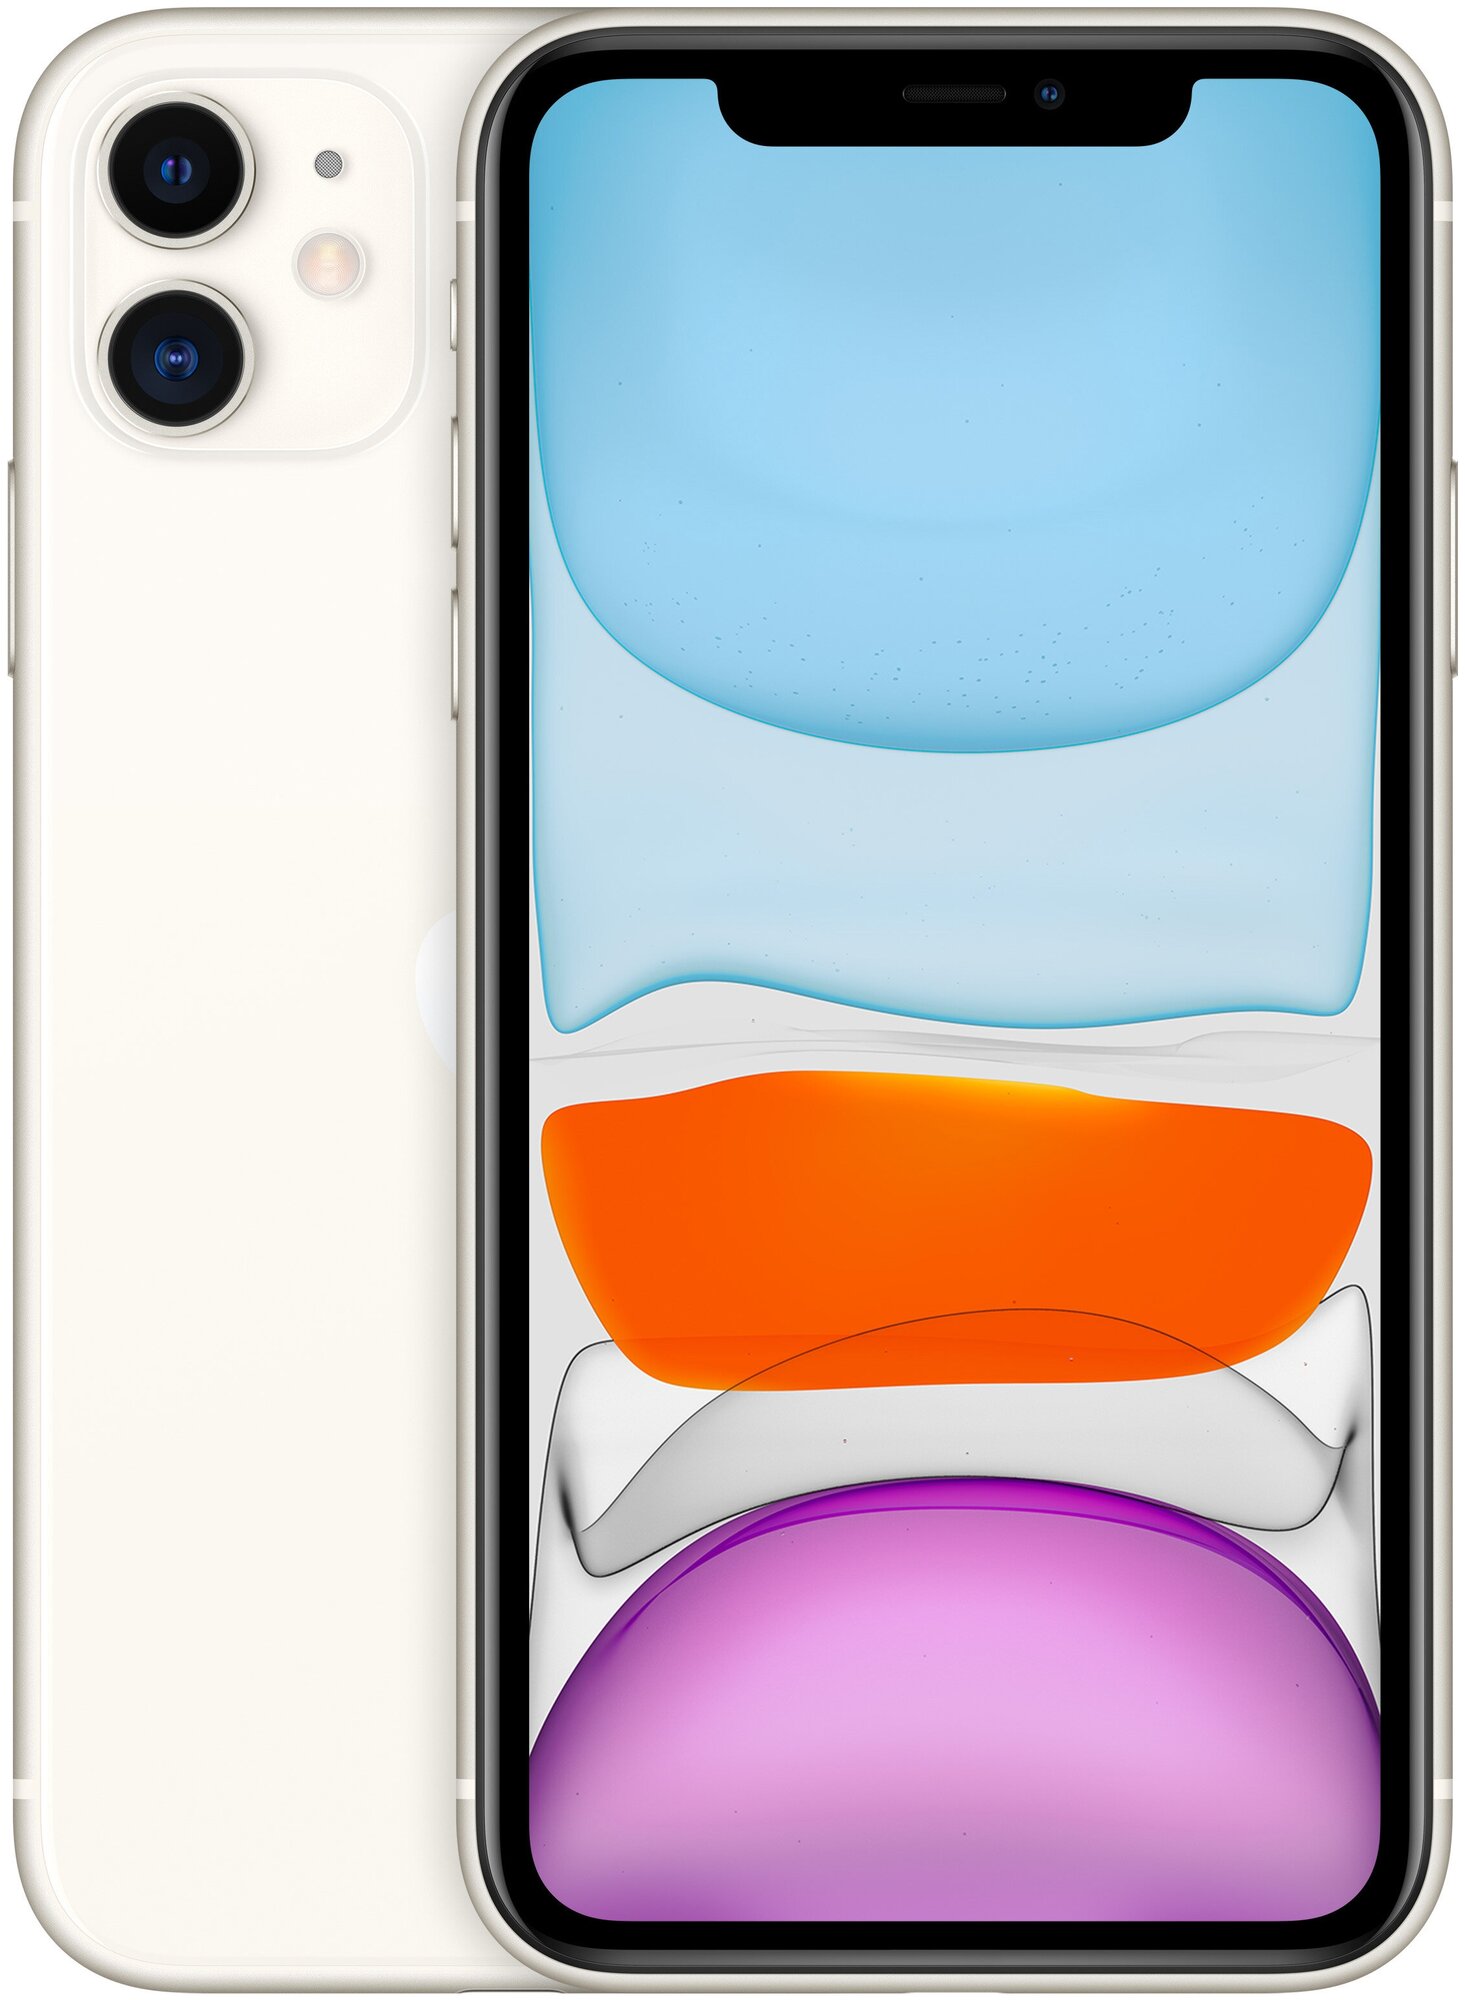 Сотовый телефон APPLE iPhone 11 64Gb White